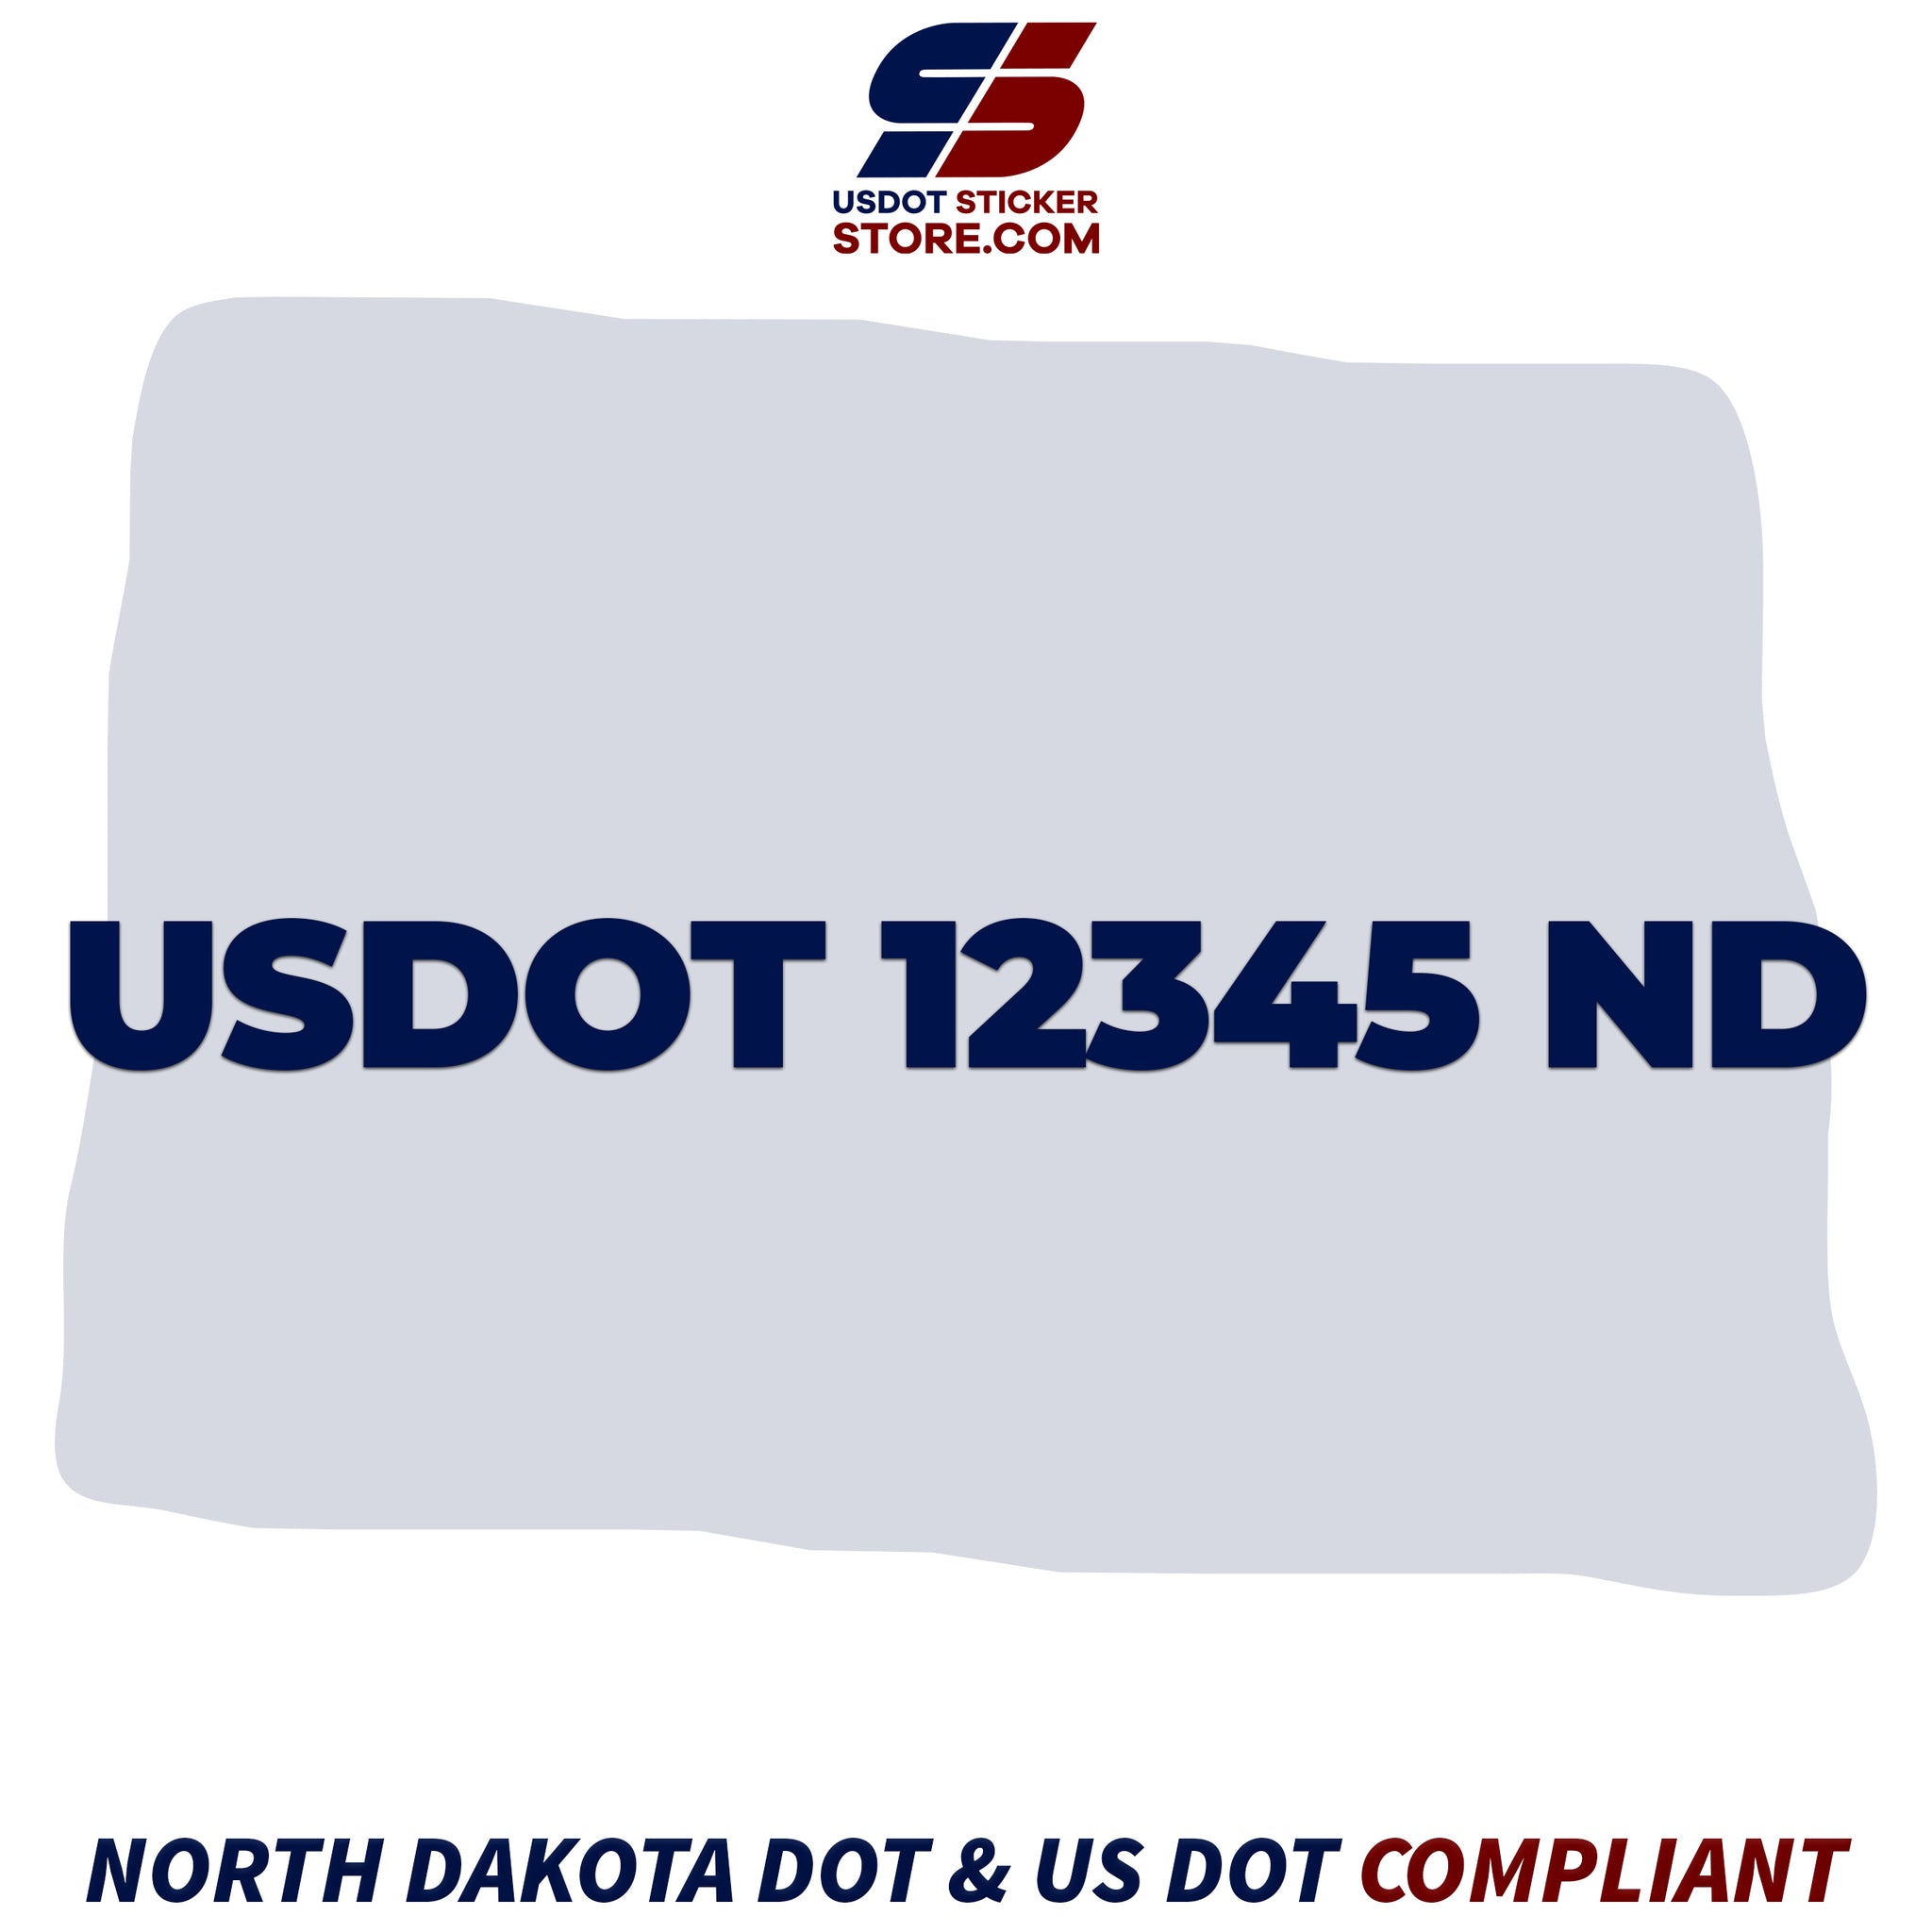 usdot sticker North Dakota